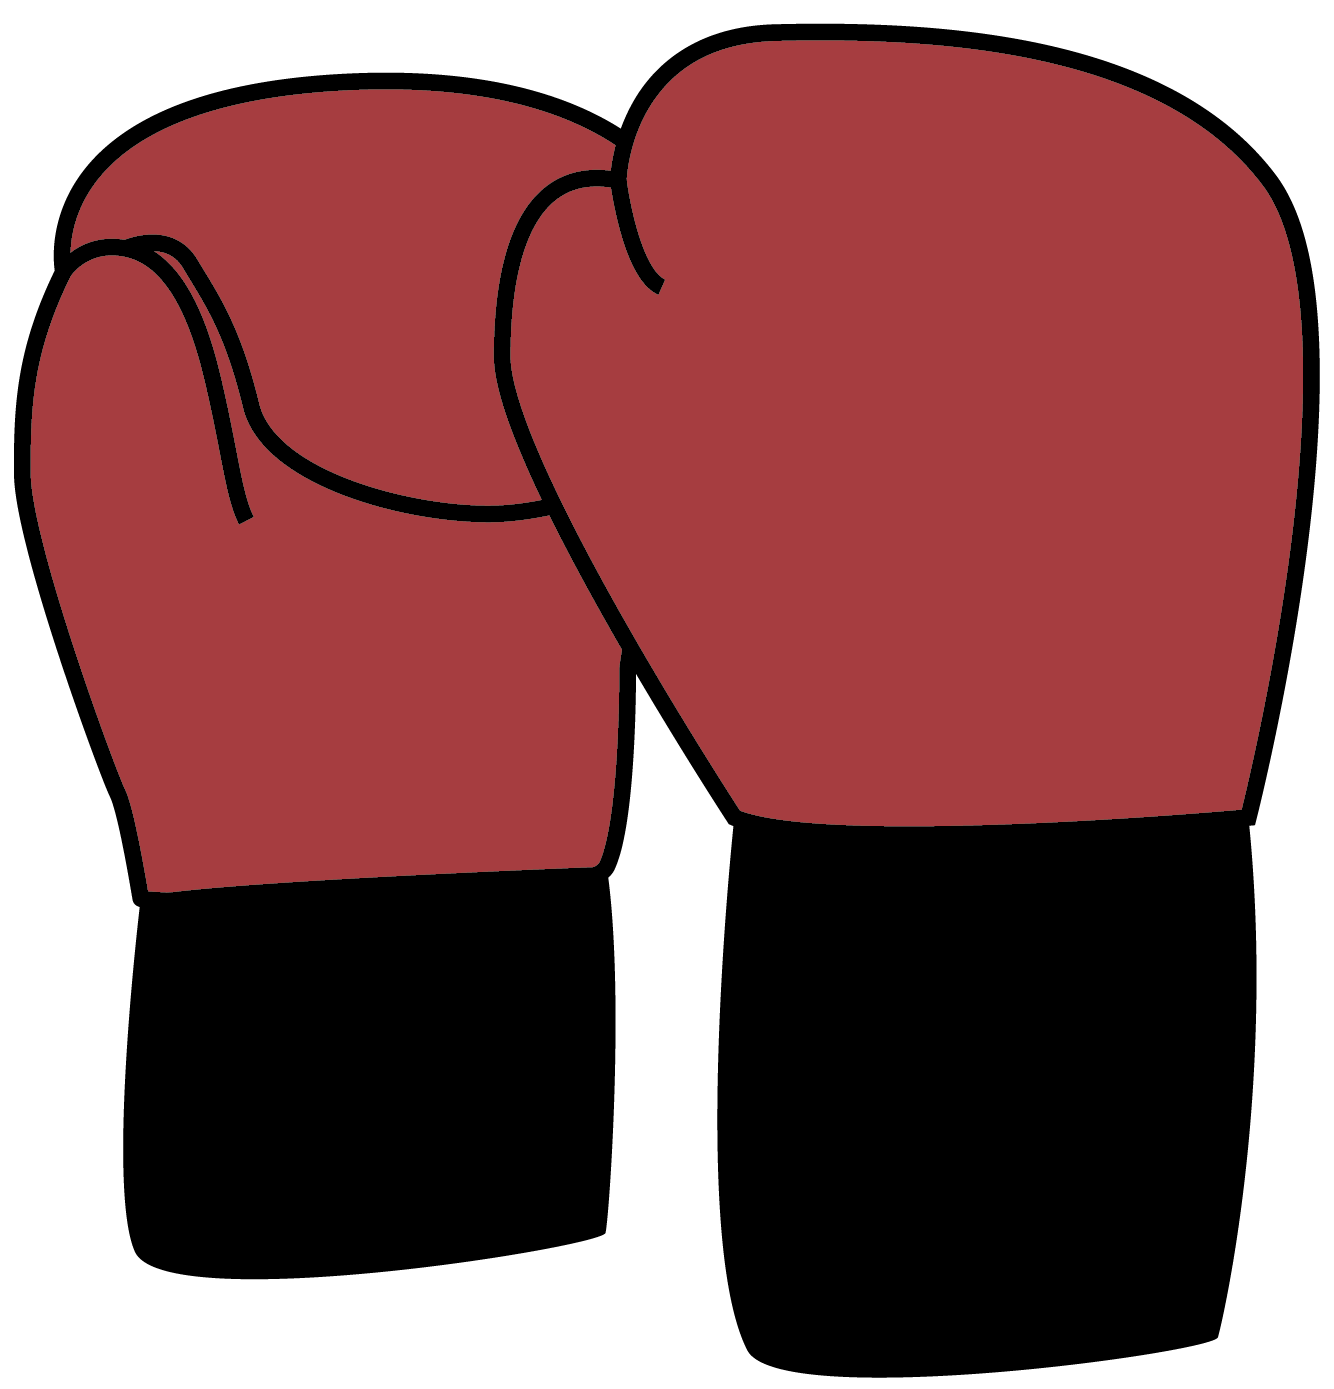 Illustration of red boxing gloves.